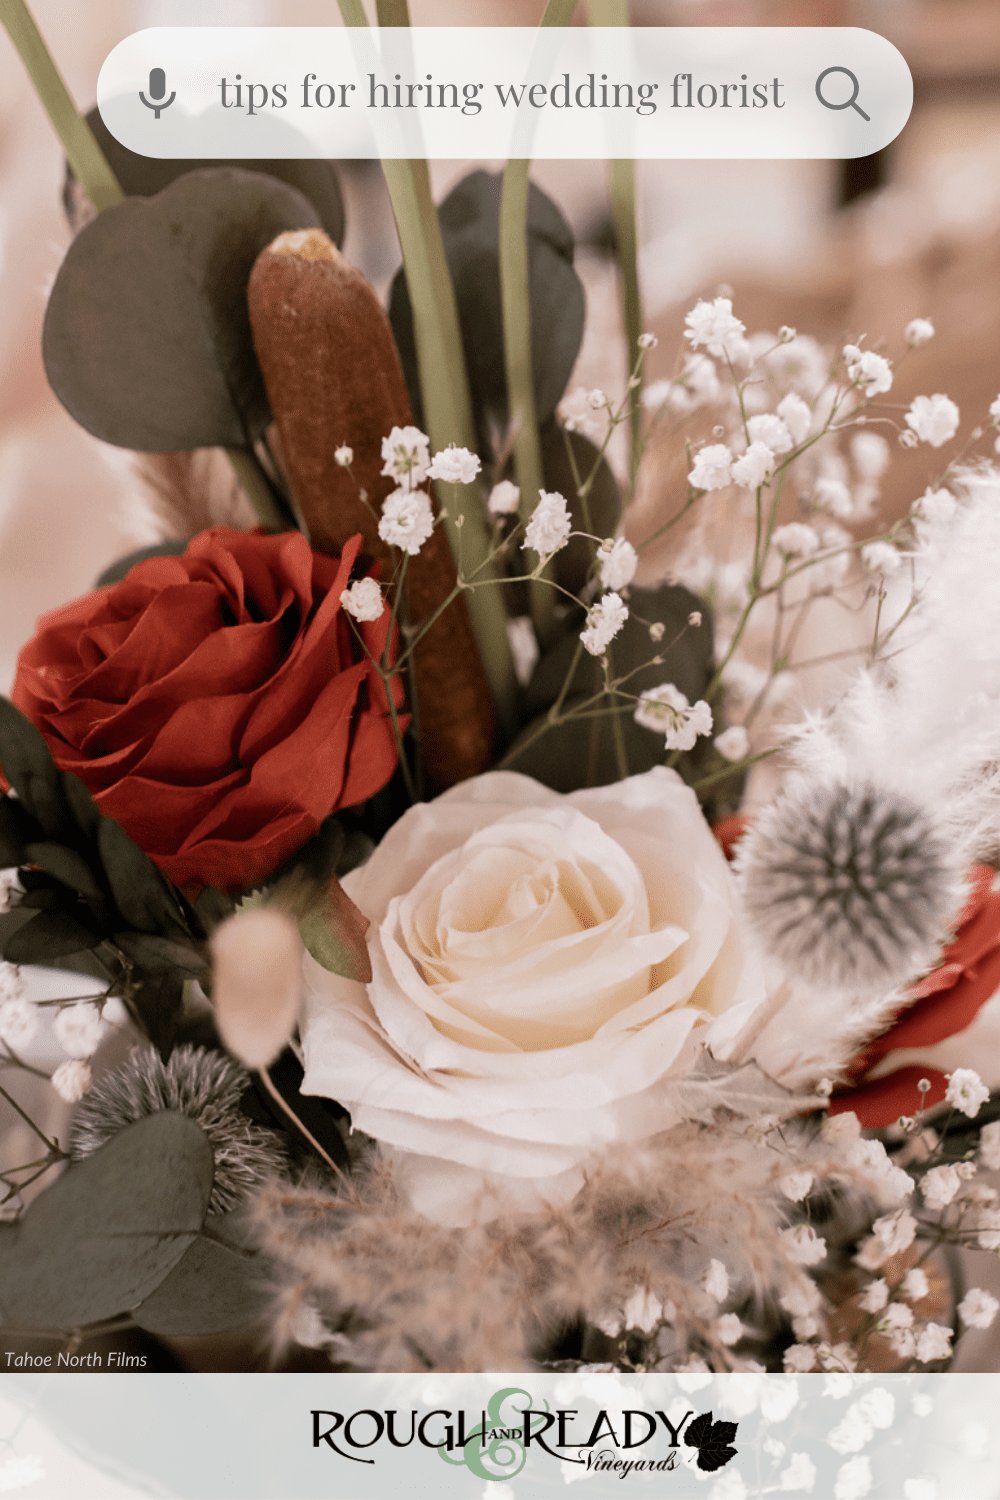 Pinterest graphic on tips for hiring wedding florist